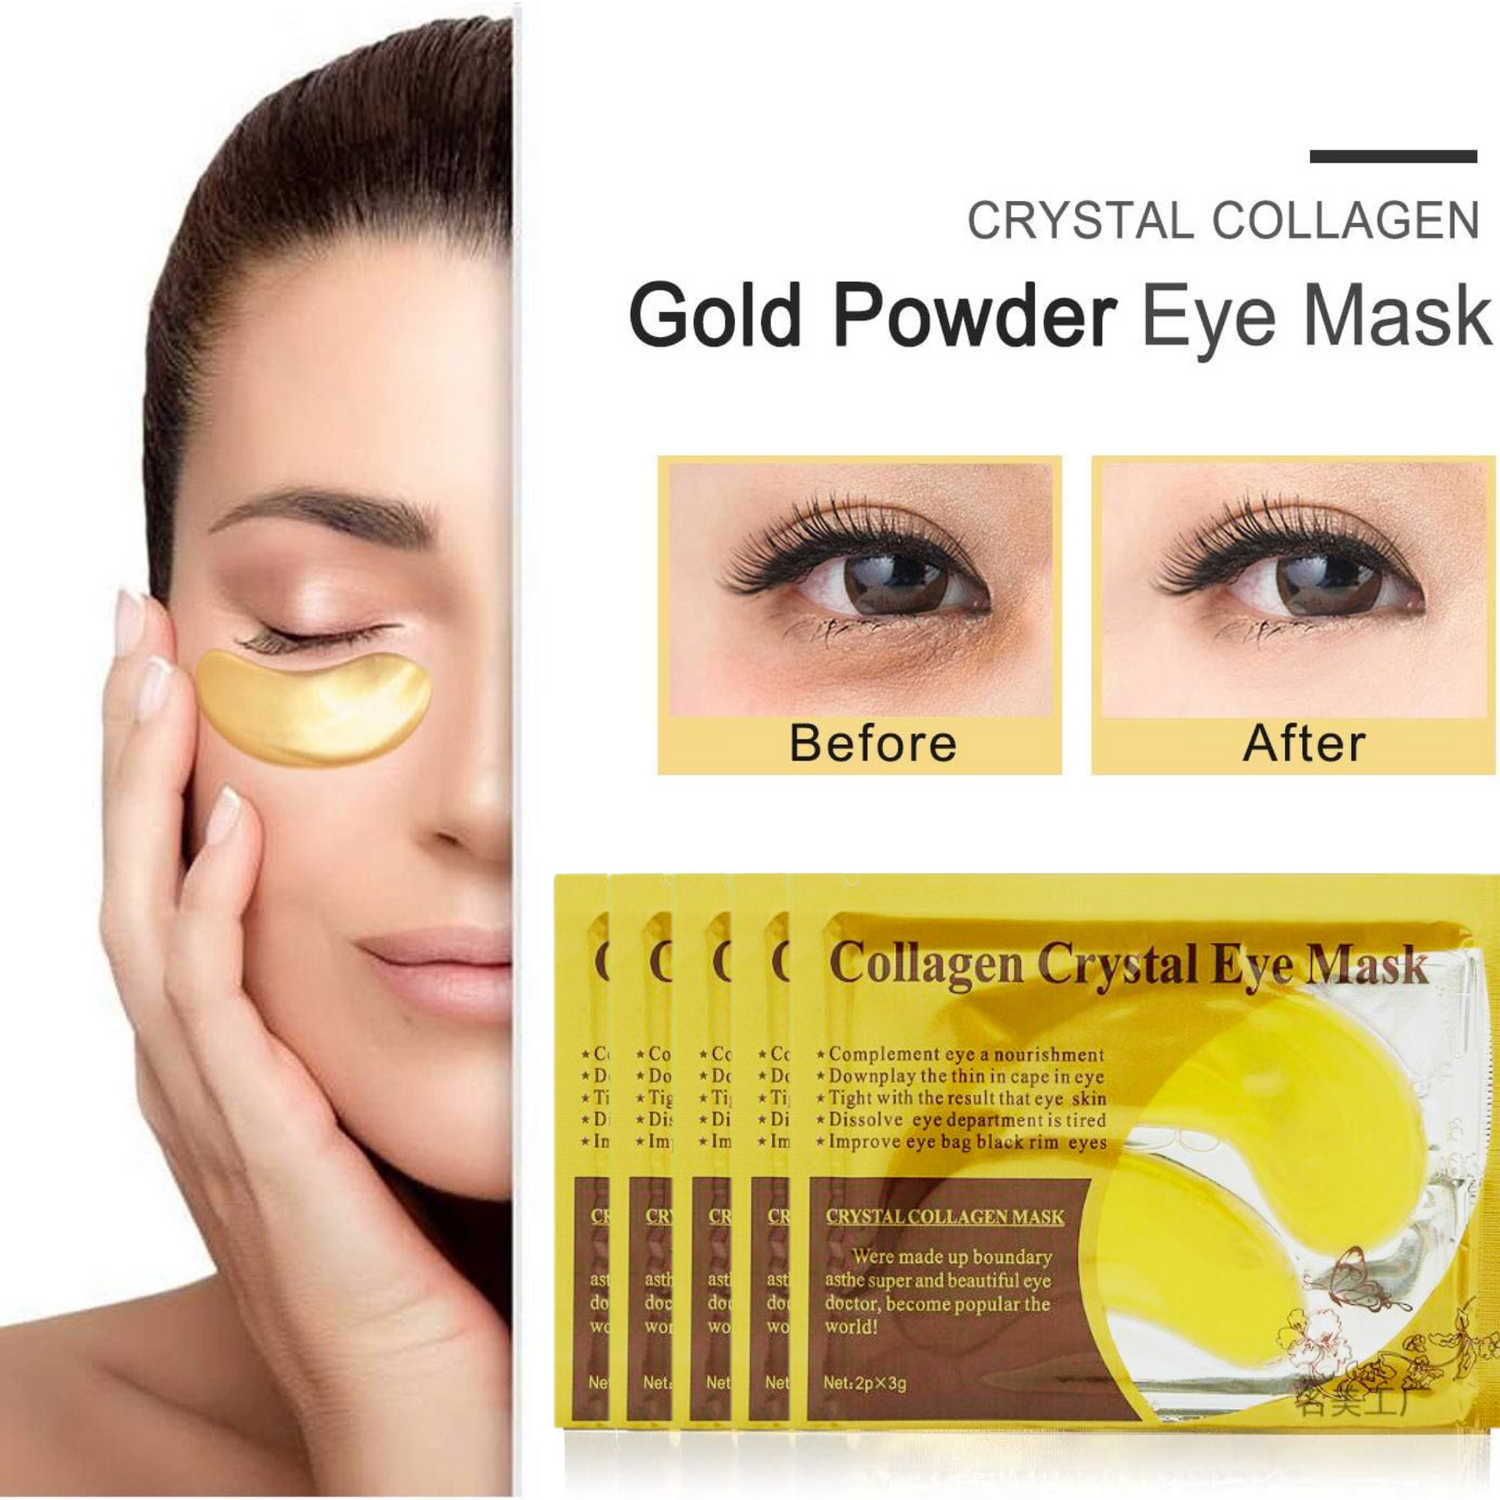 [GIFT Eye Mask] Kasumi Abera Cream Official